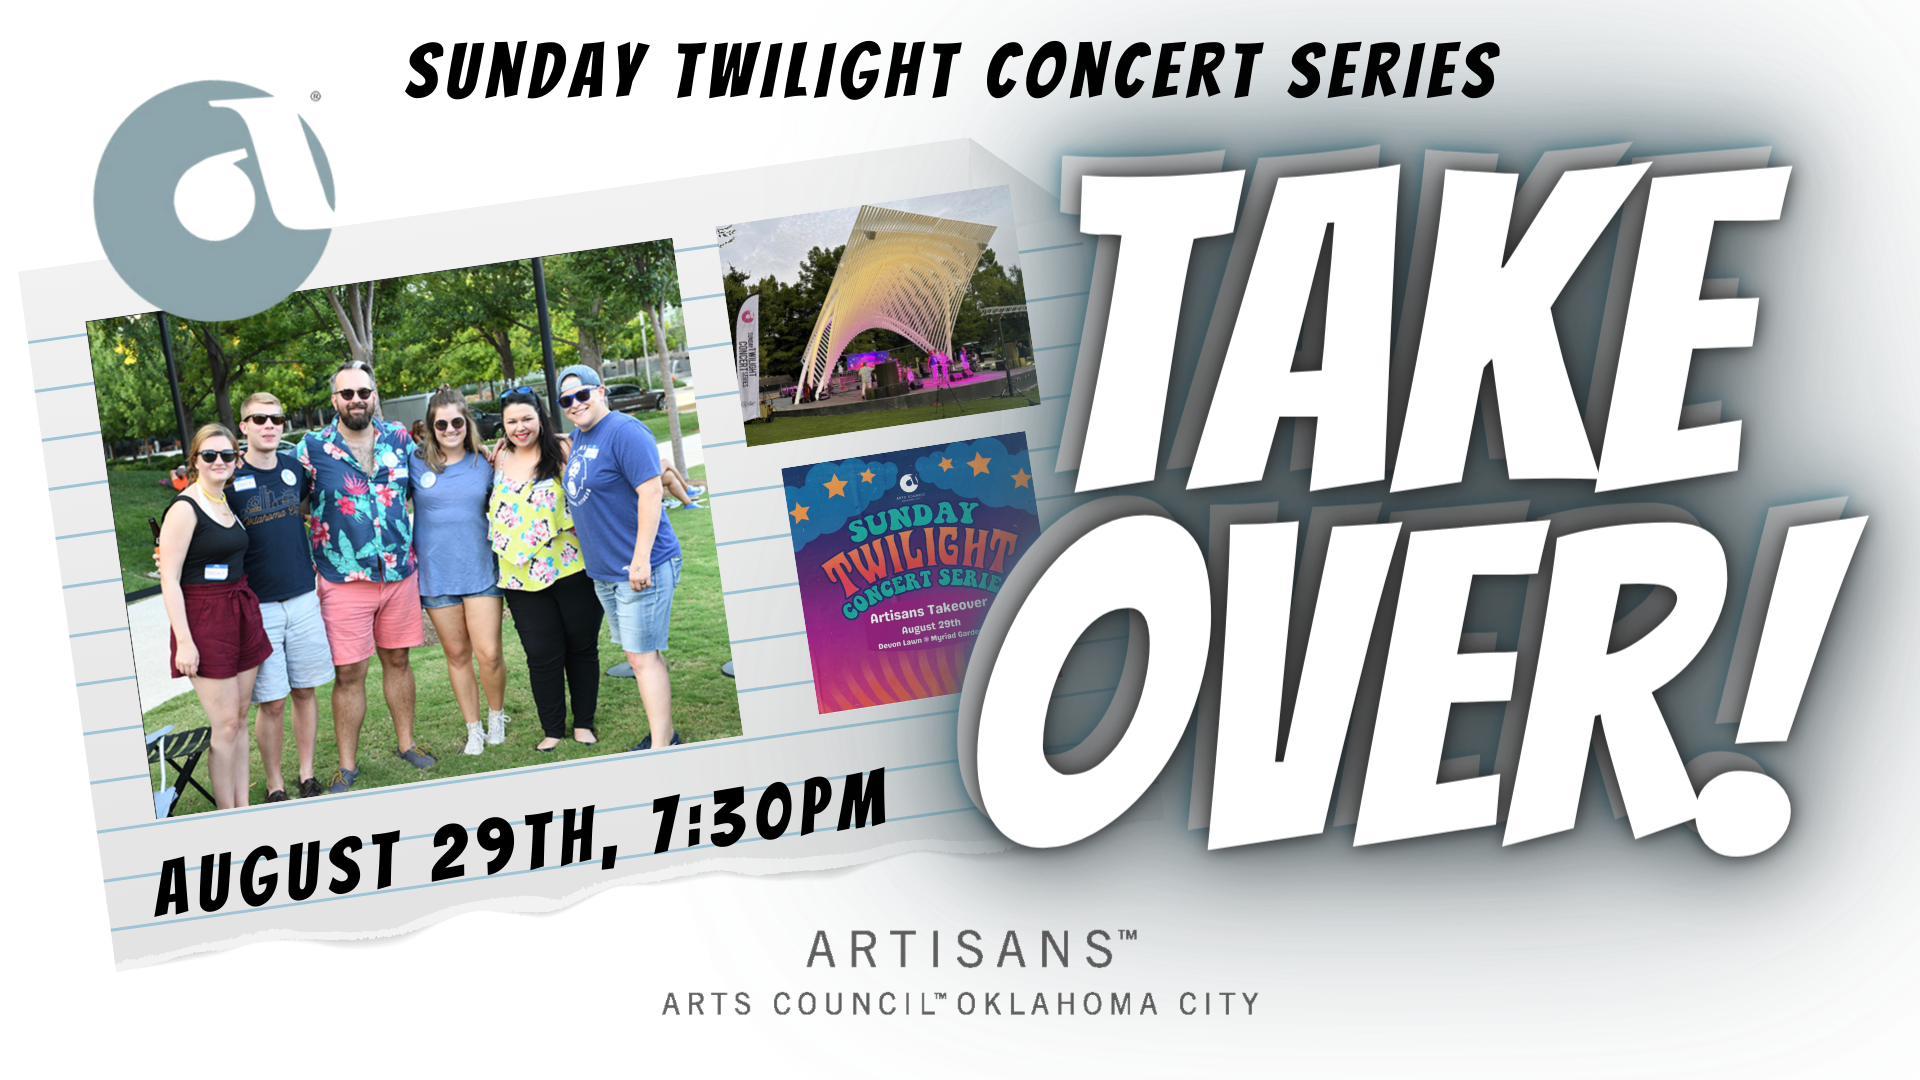 Artisans Take Over Sunday Twilight Concert Series!